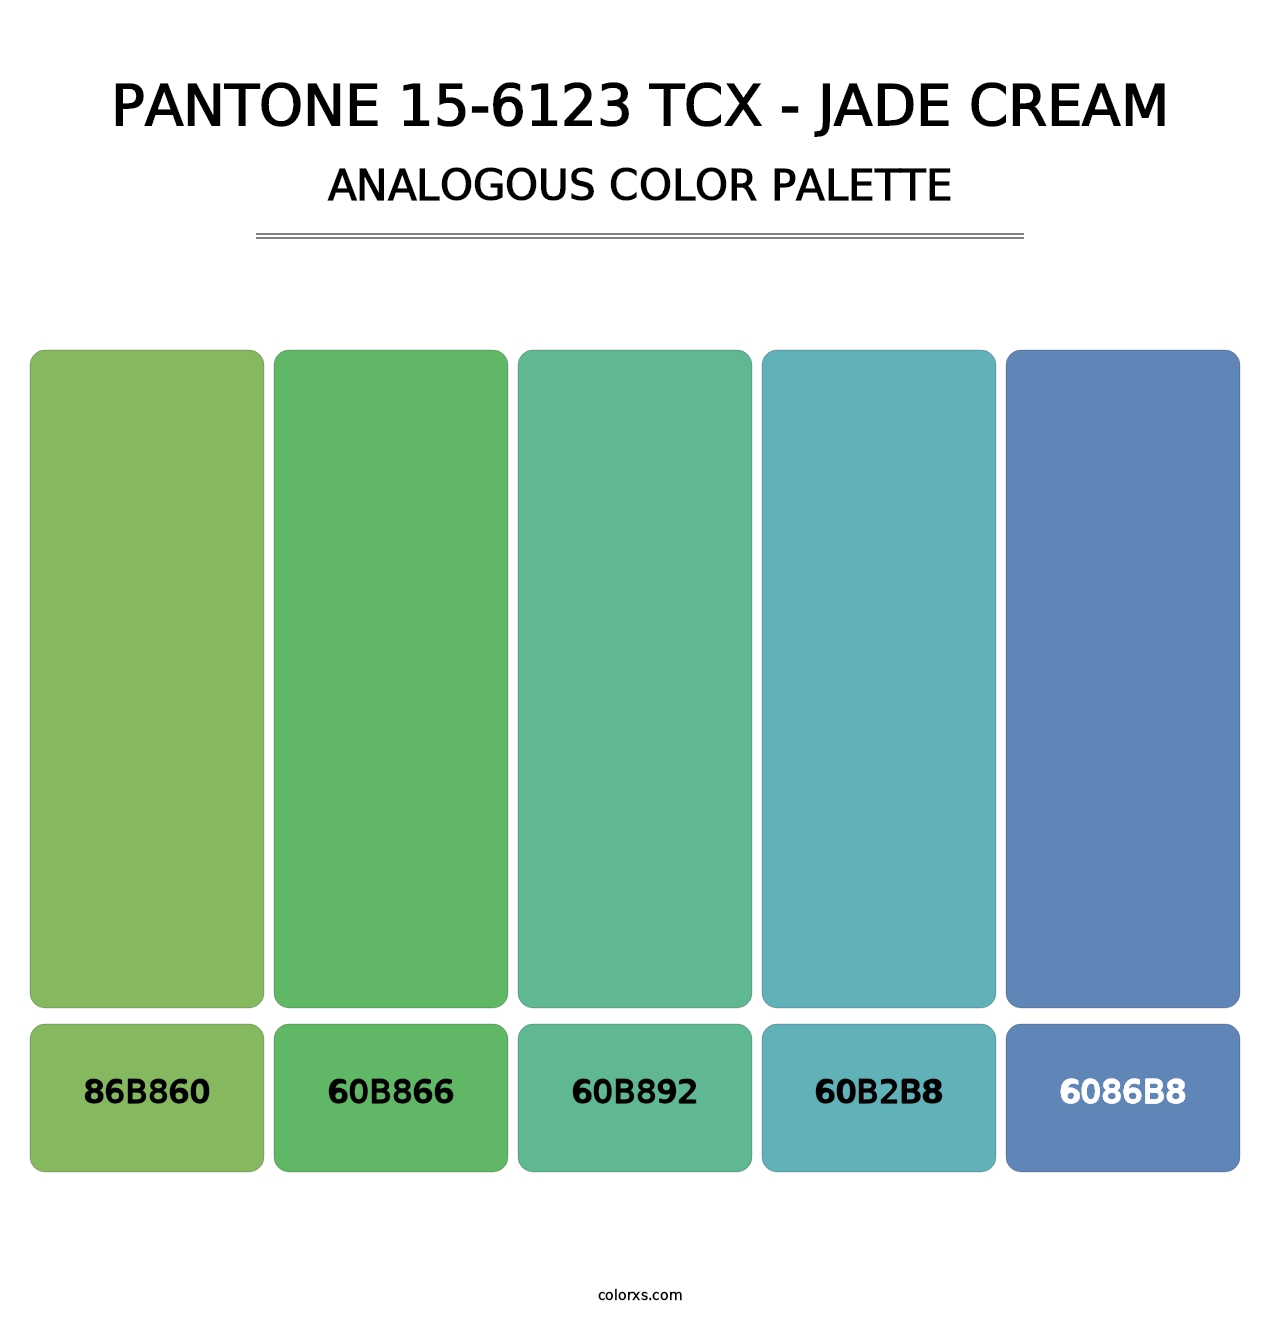 PANTONE 15-6123 TCX - Jade Cream - Analogous Color Palette